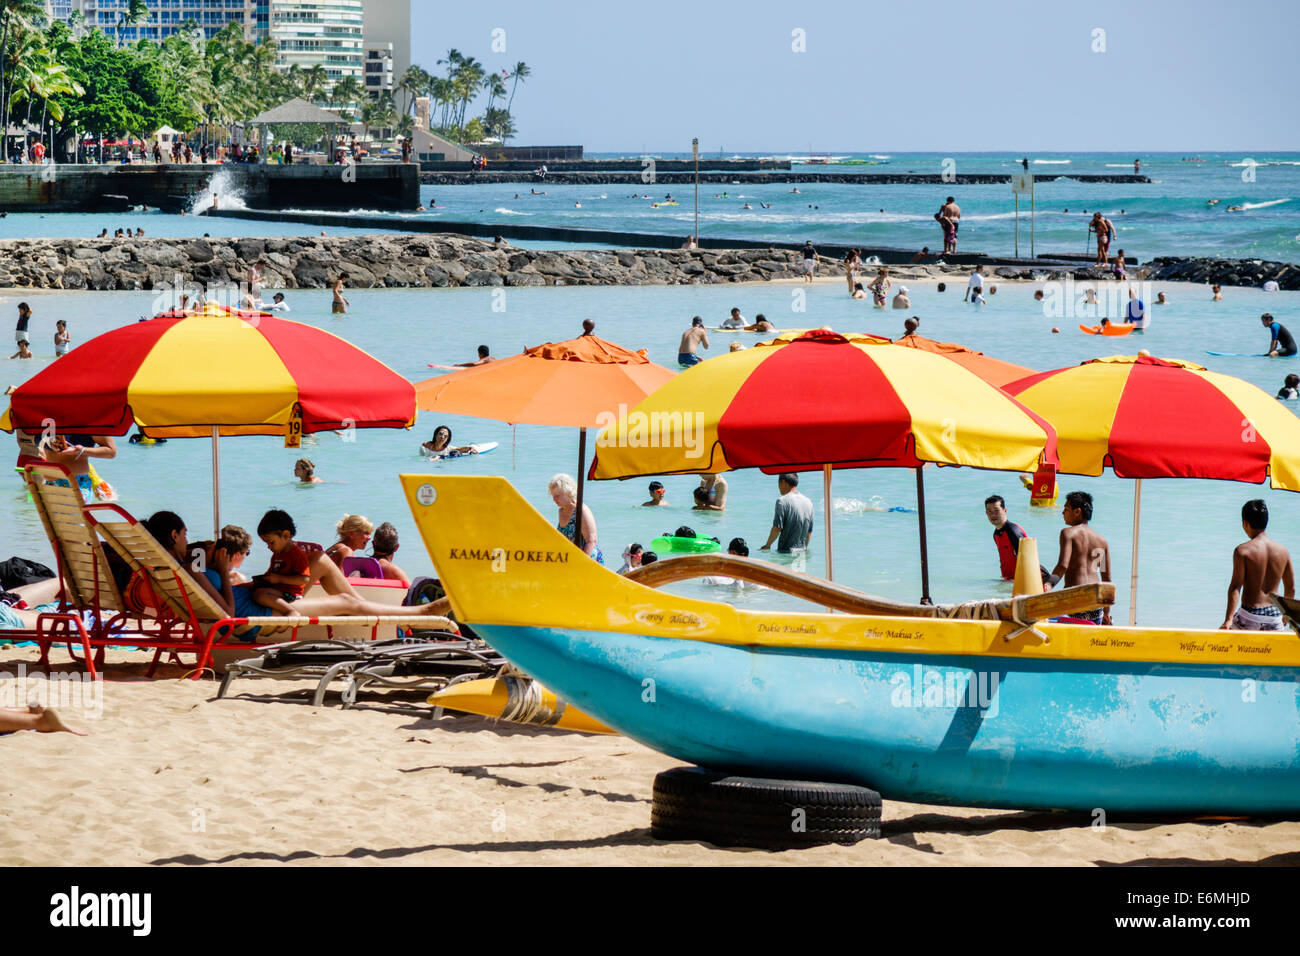 Honolulu Waikiki Beach Hawaii, Hawaiian, Oahu, Wasser im Pazifischen Ozean, Kuhio Beach Park, am Wasser, Sonnenanbeter, Schwimmer, Badegäste, Sand, Auslegerkanu, Regenschirme Stockfoto